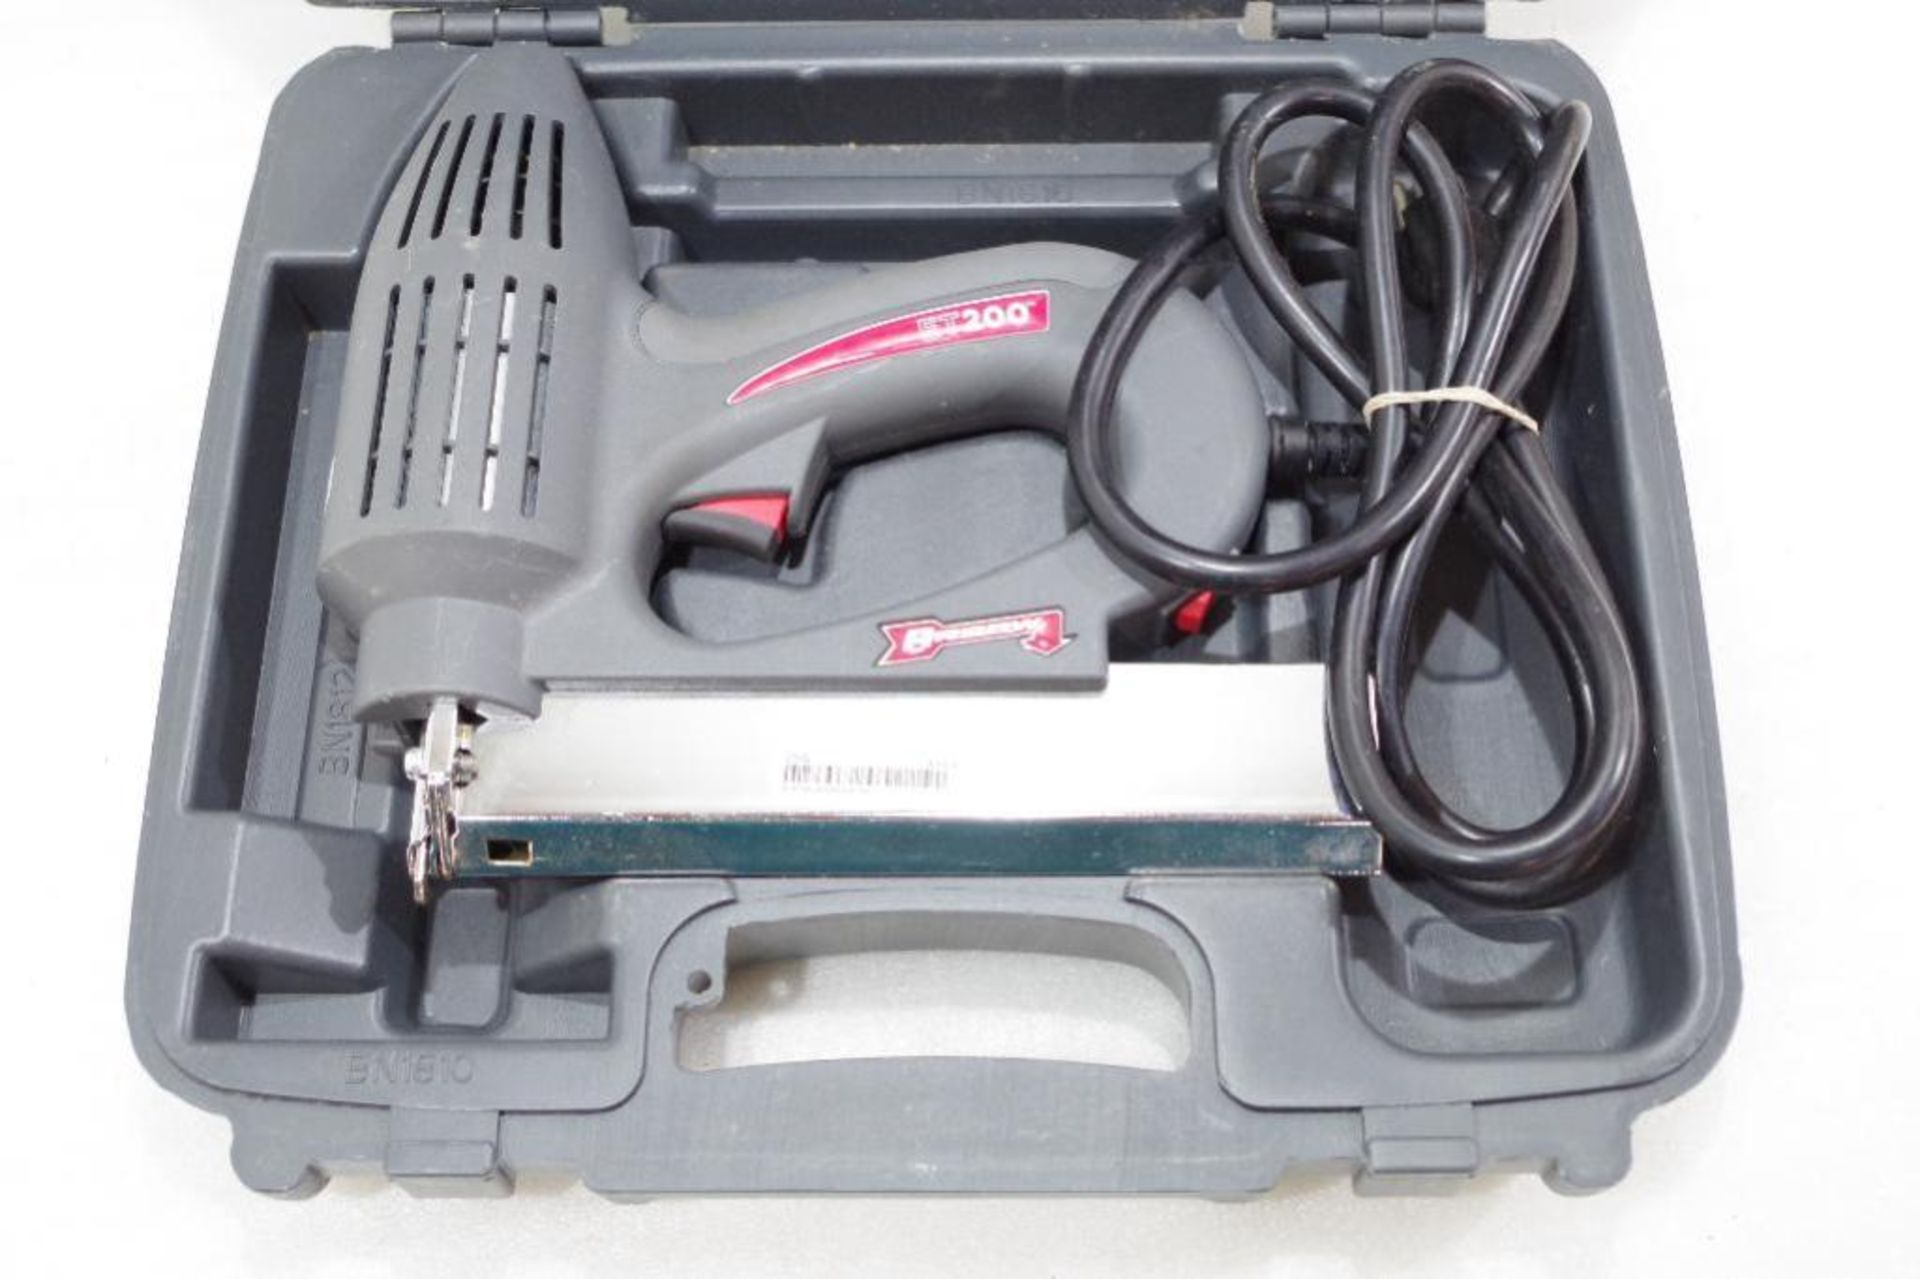 ARROW Fastener Heavy Duty Electric Nail Gun M/N ET200 w/ Tool Case